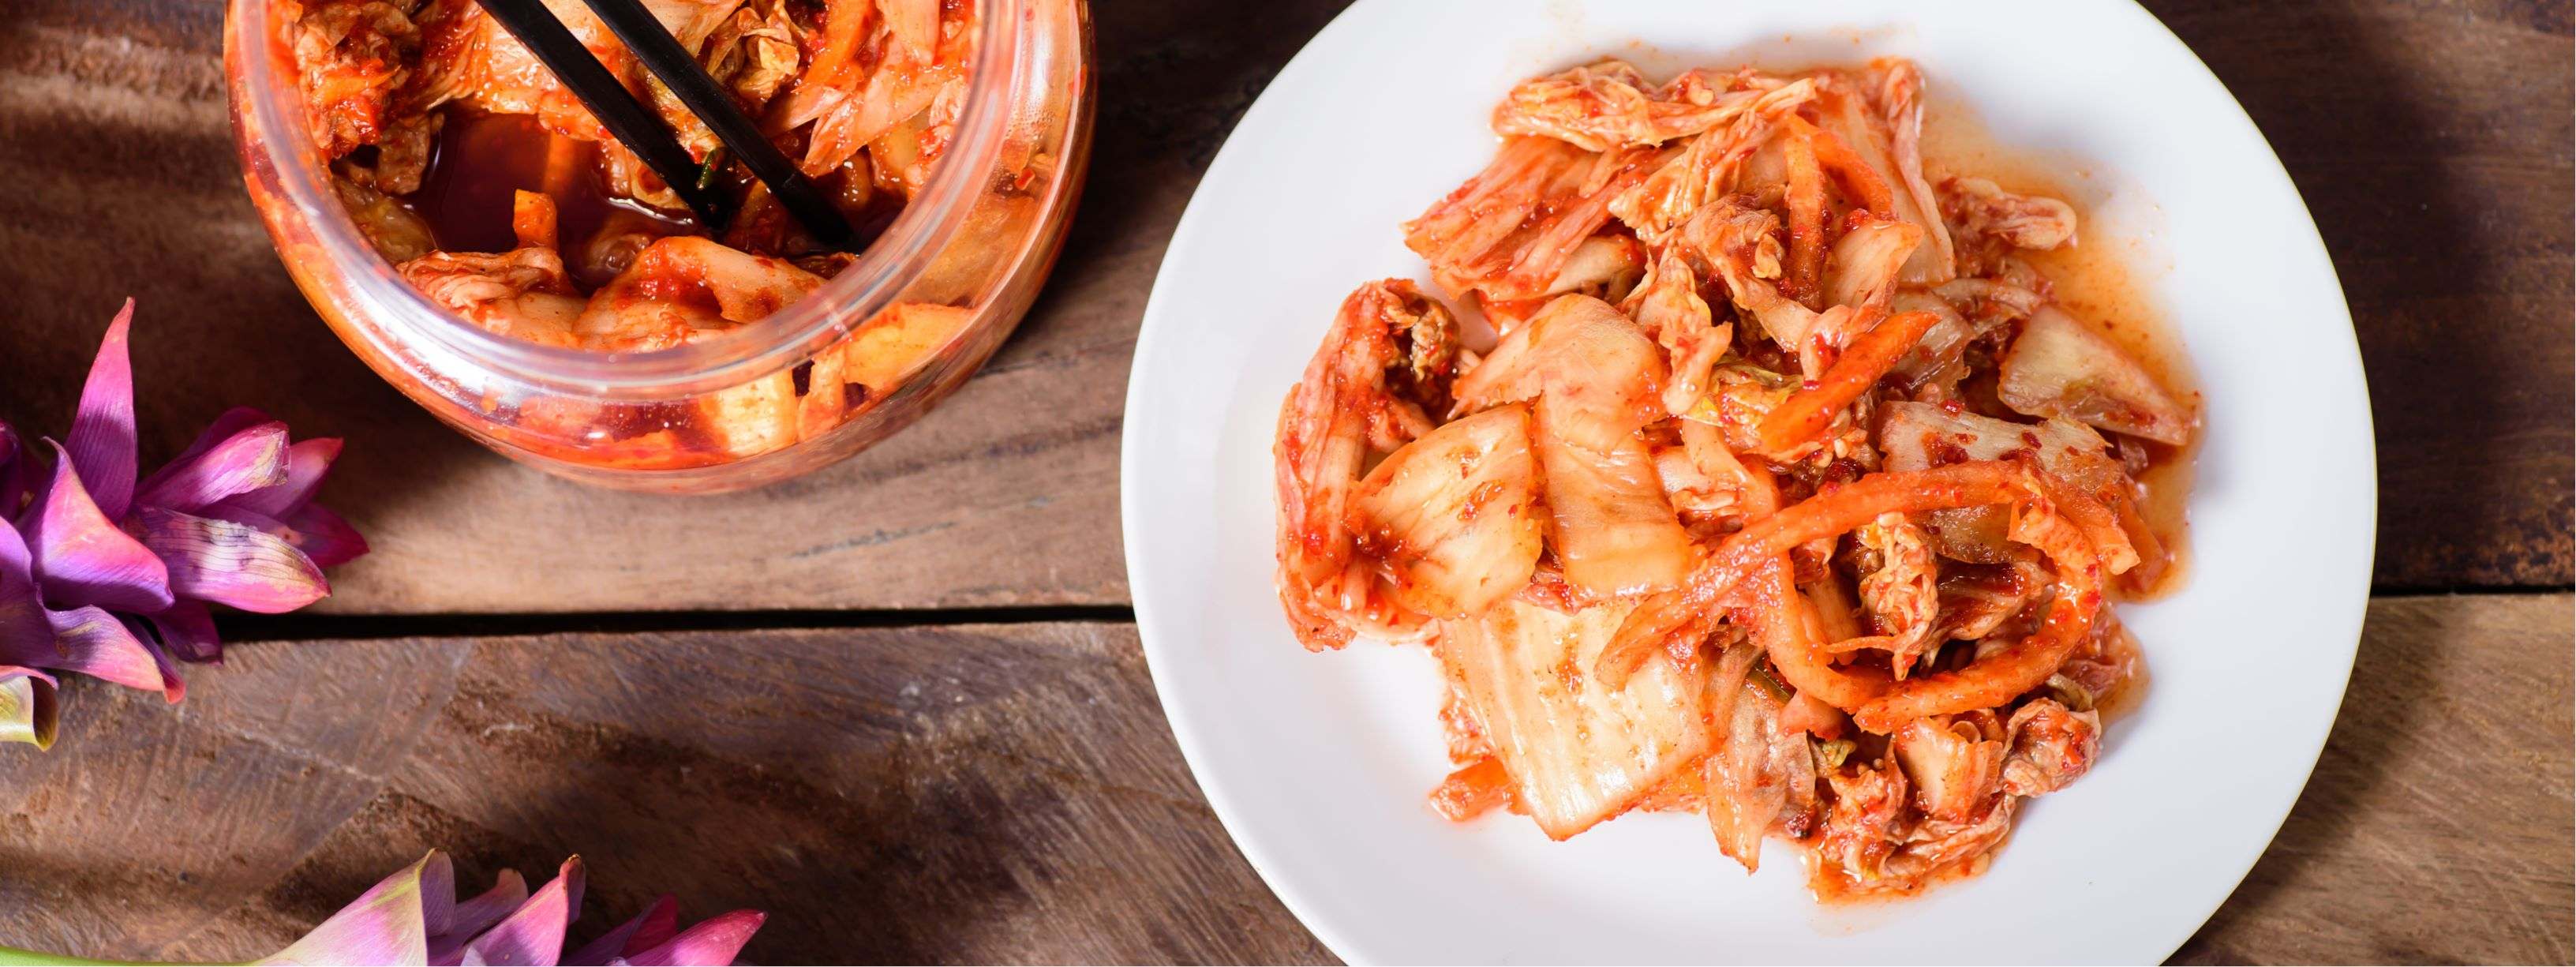 Kimchi alebo kimči – kórejský šalát z kvasenej zeleniny